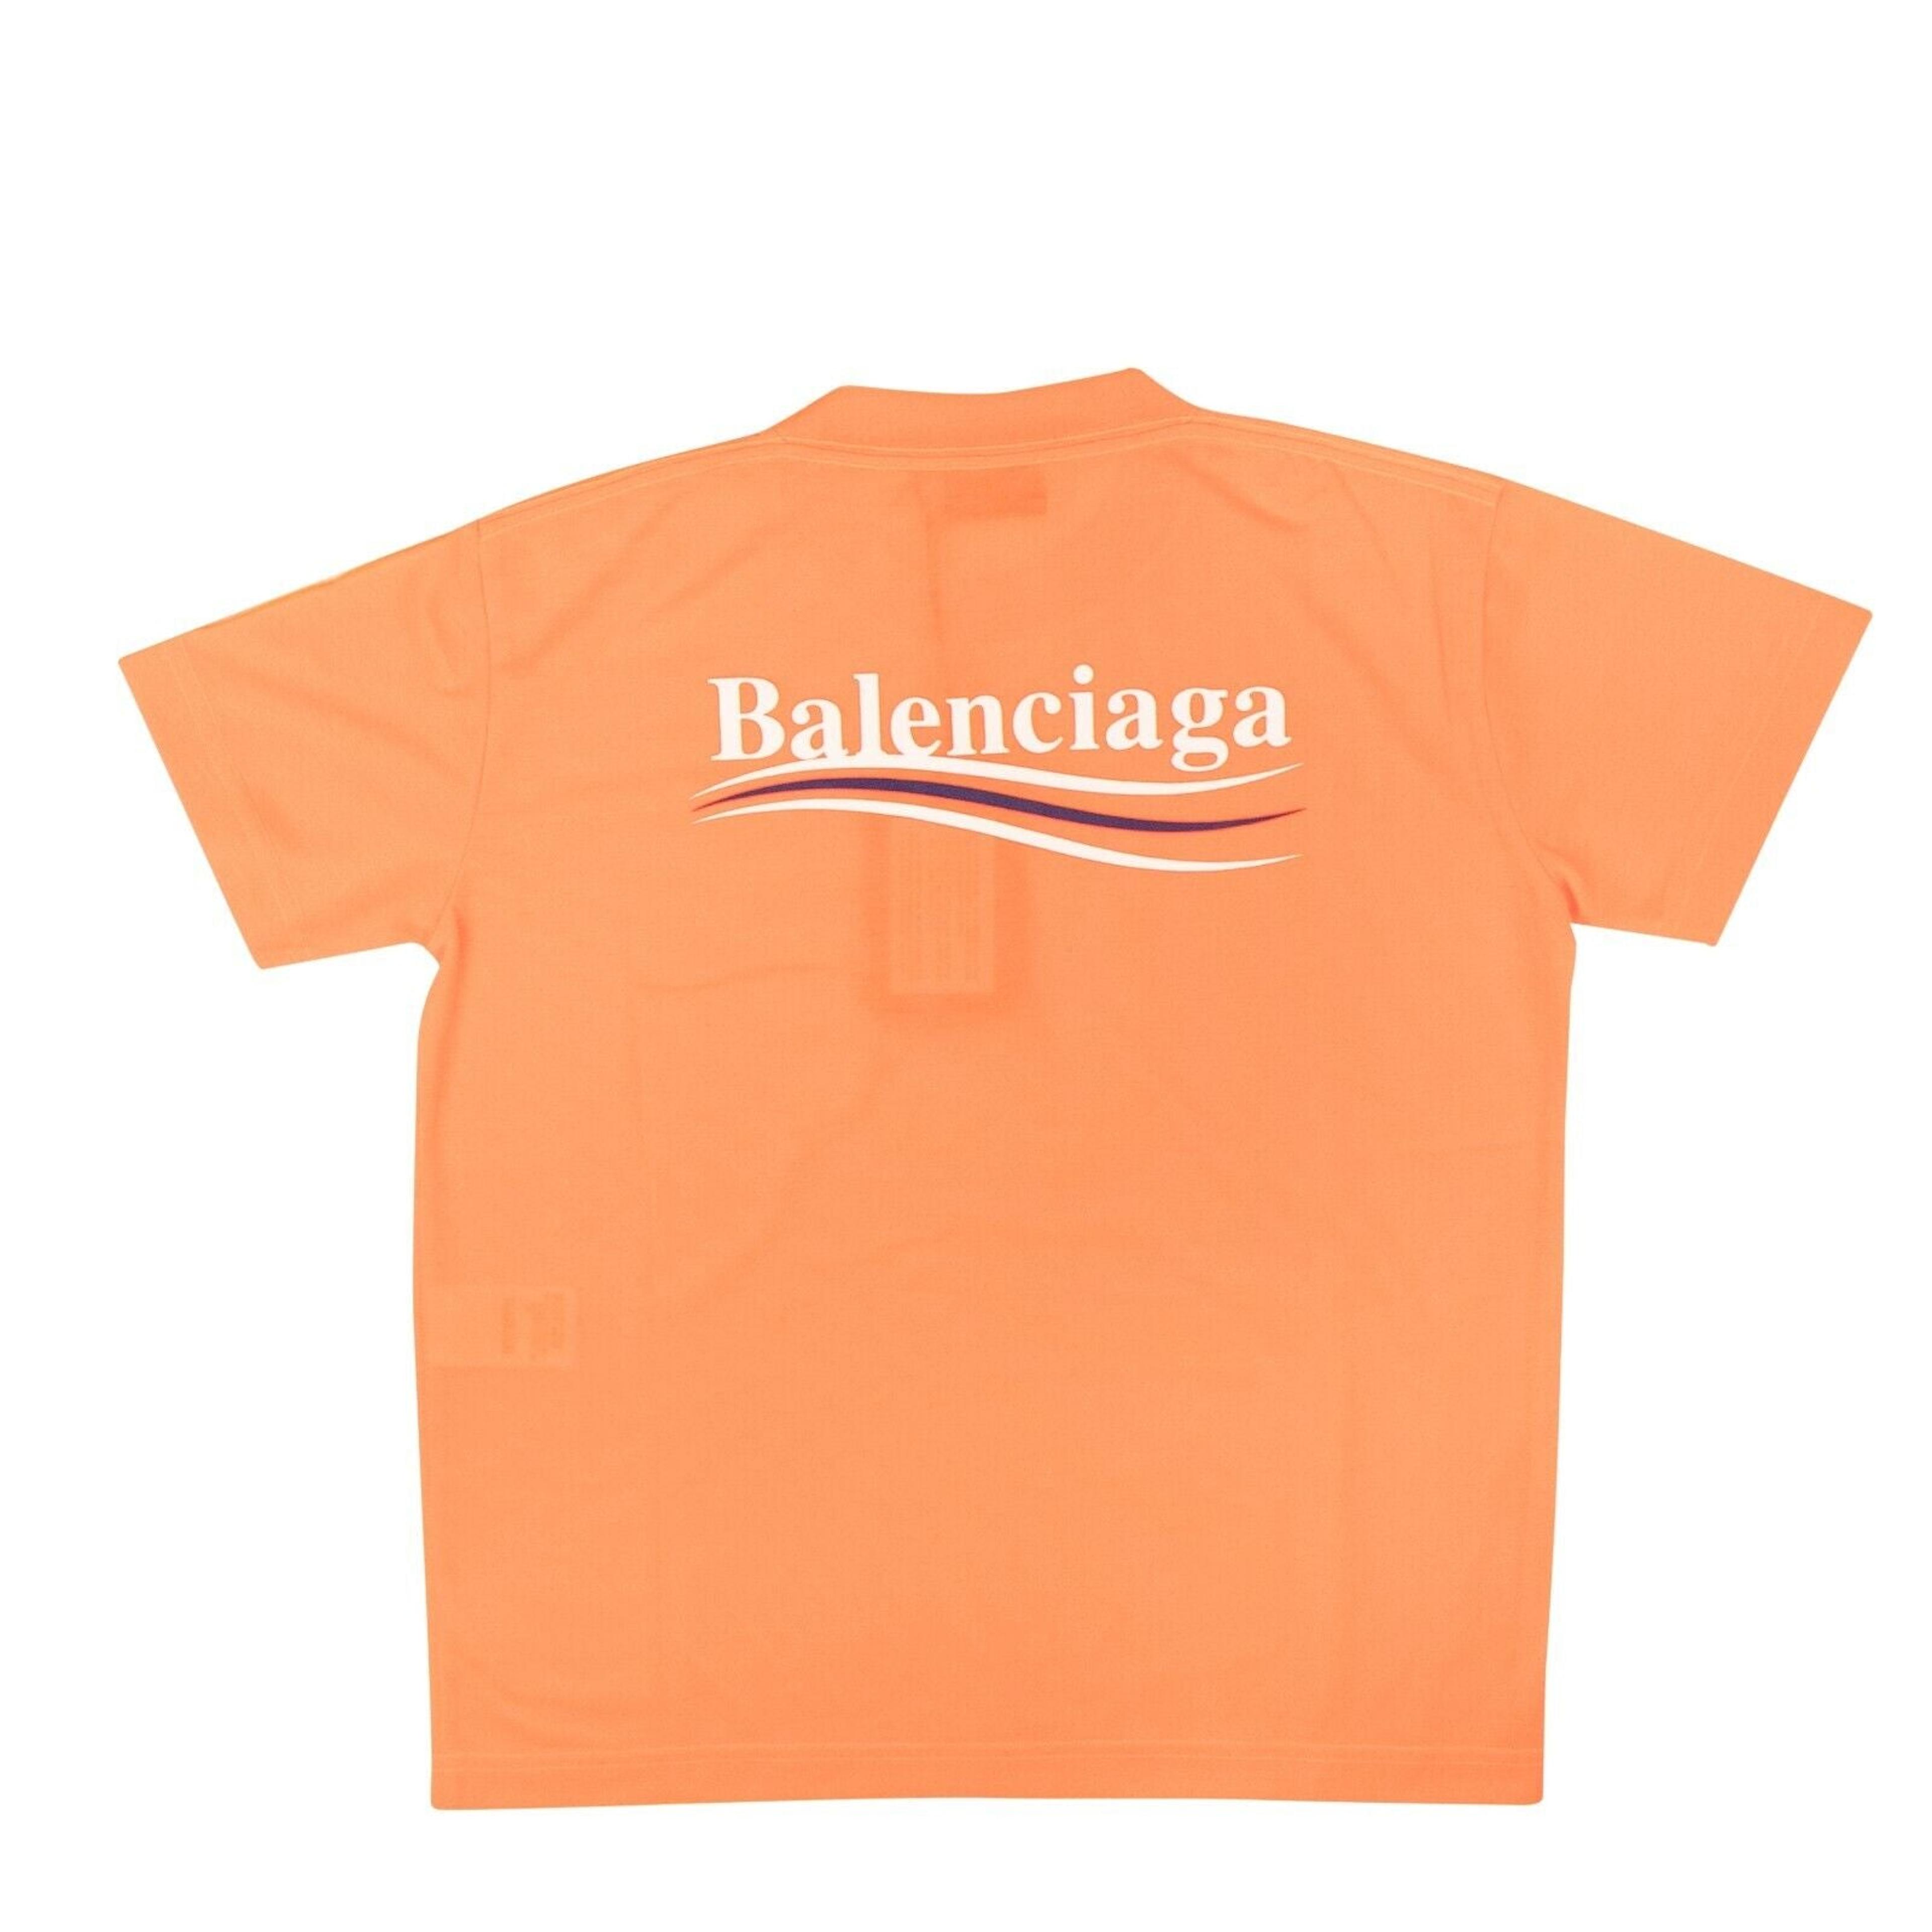 Alternate View 3 of Balenciaga Political Campaign T-Shirt - Orange